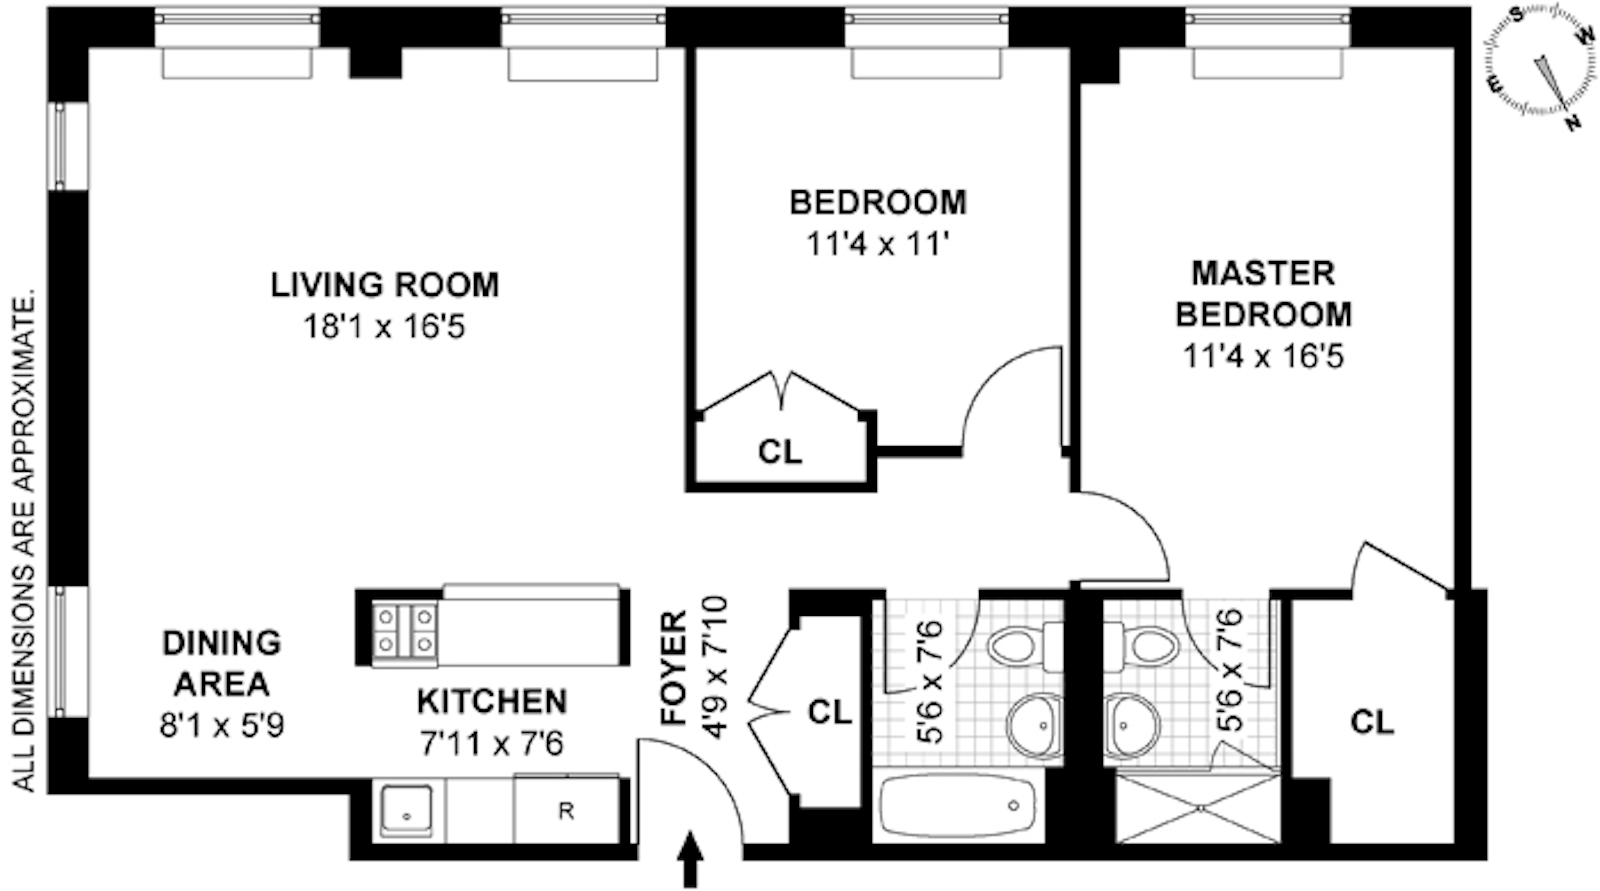 Floorplan for 300 West 135th Street, 3G